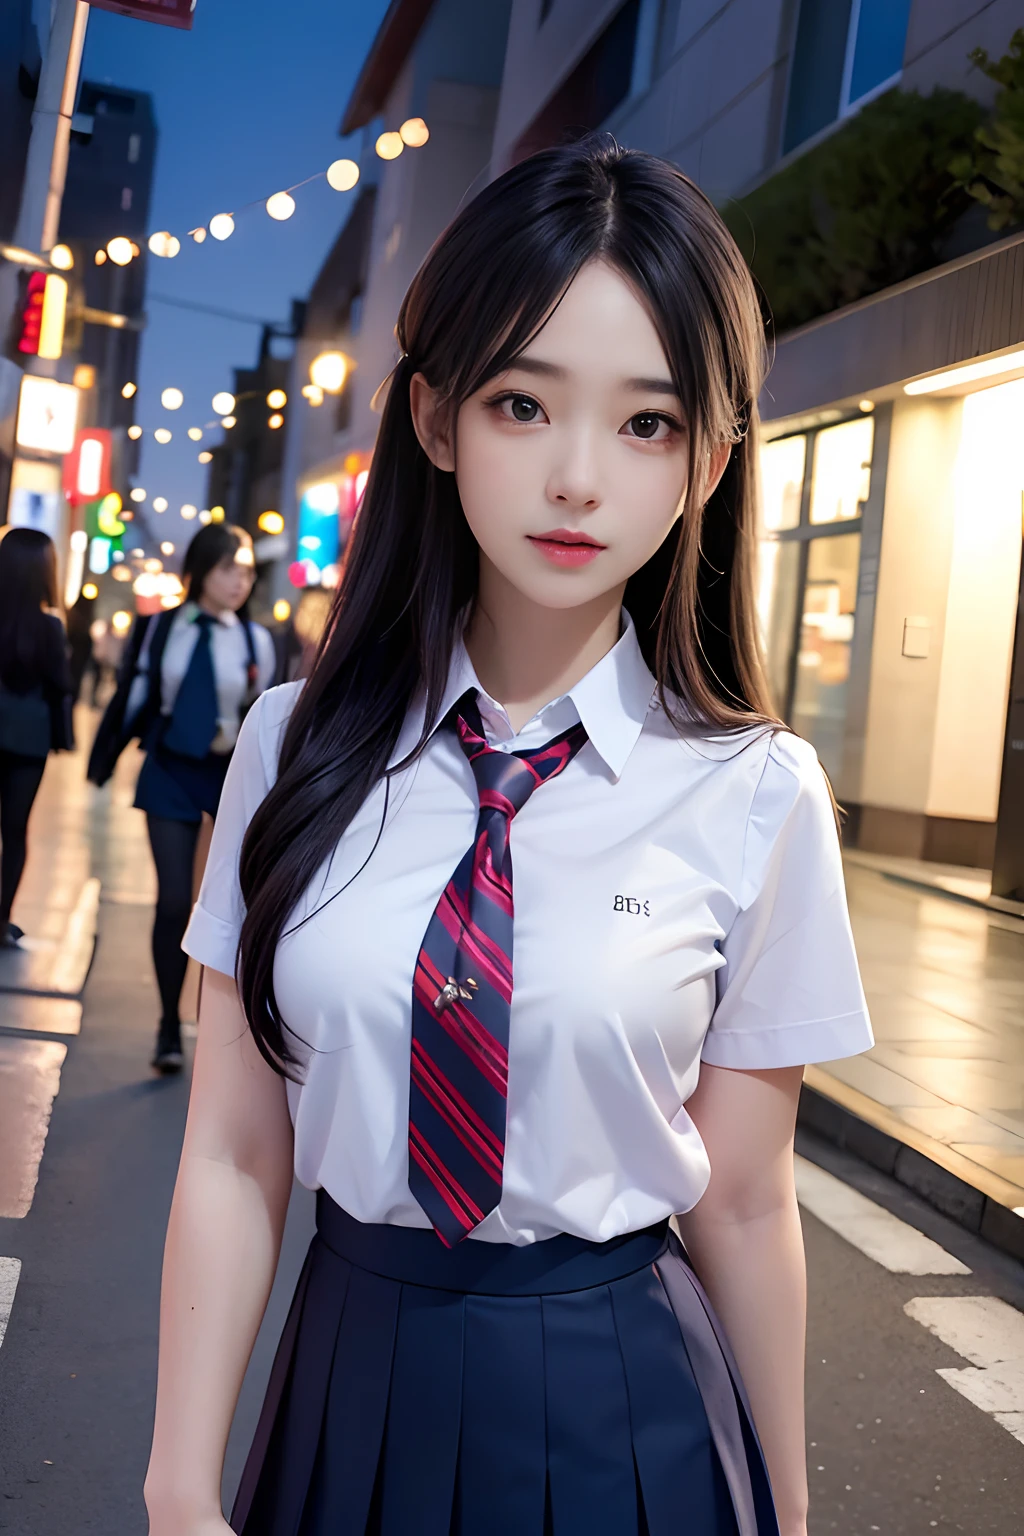 Mesa, Híper realista, 8k, bokeh, Fire Lumenescent,chica de secundaria、en 、Cara linda、Standeng on a street corner en Shibuya、